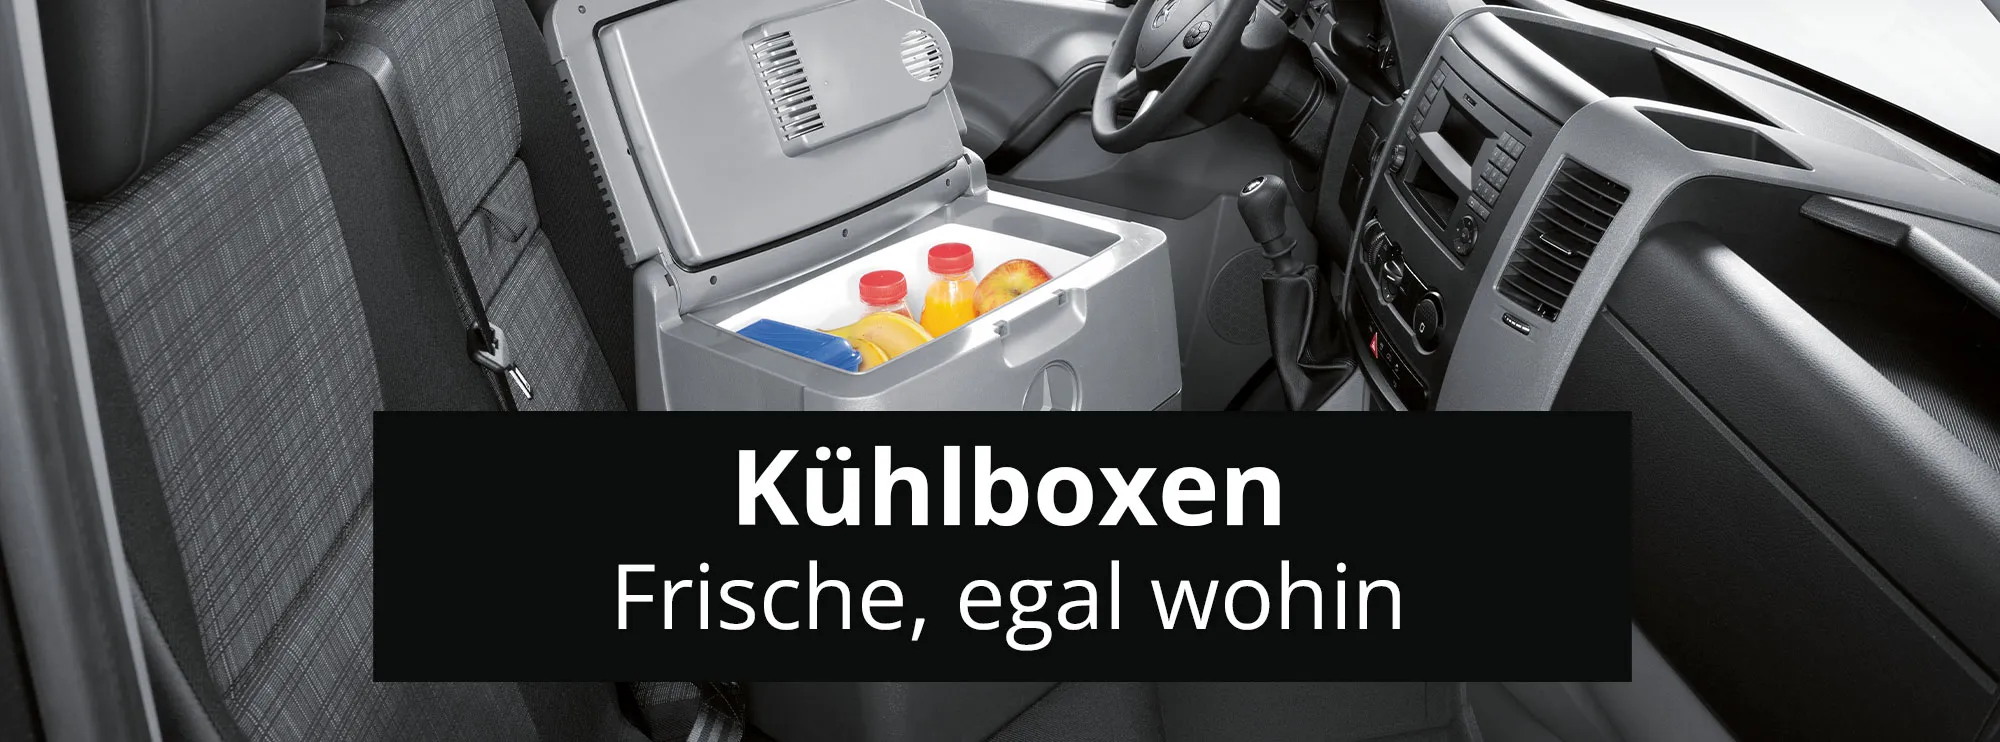 Volkswagen khlboxen rosier onlineshop header